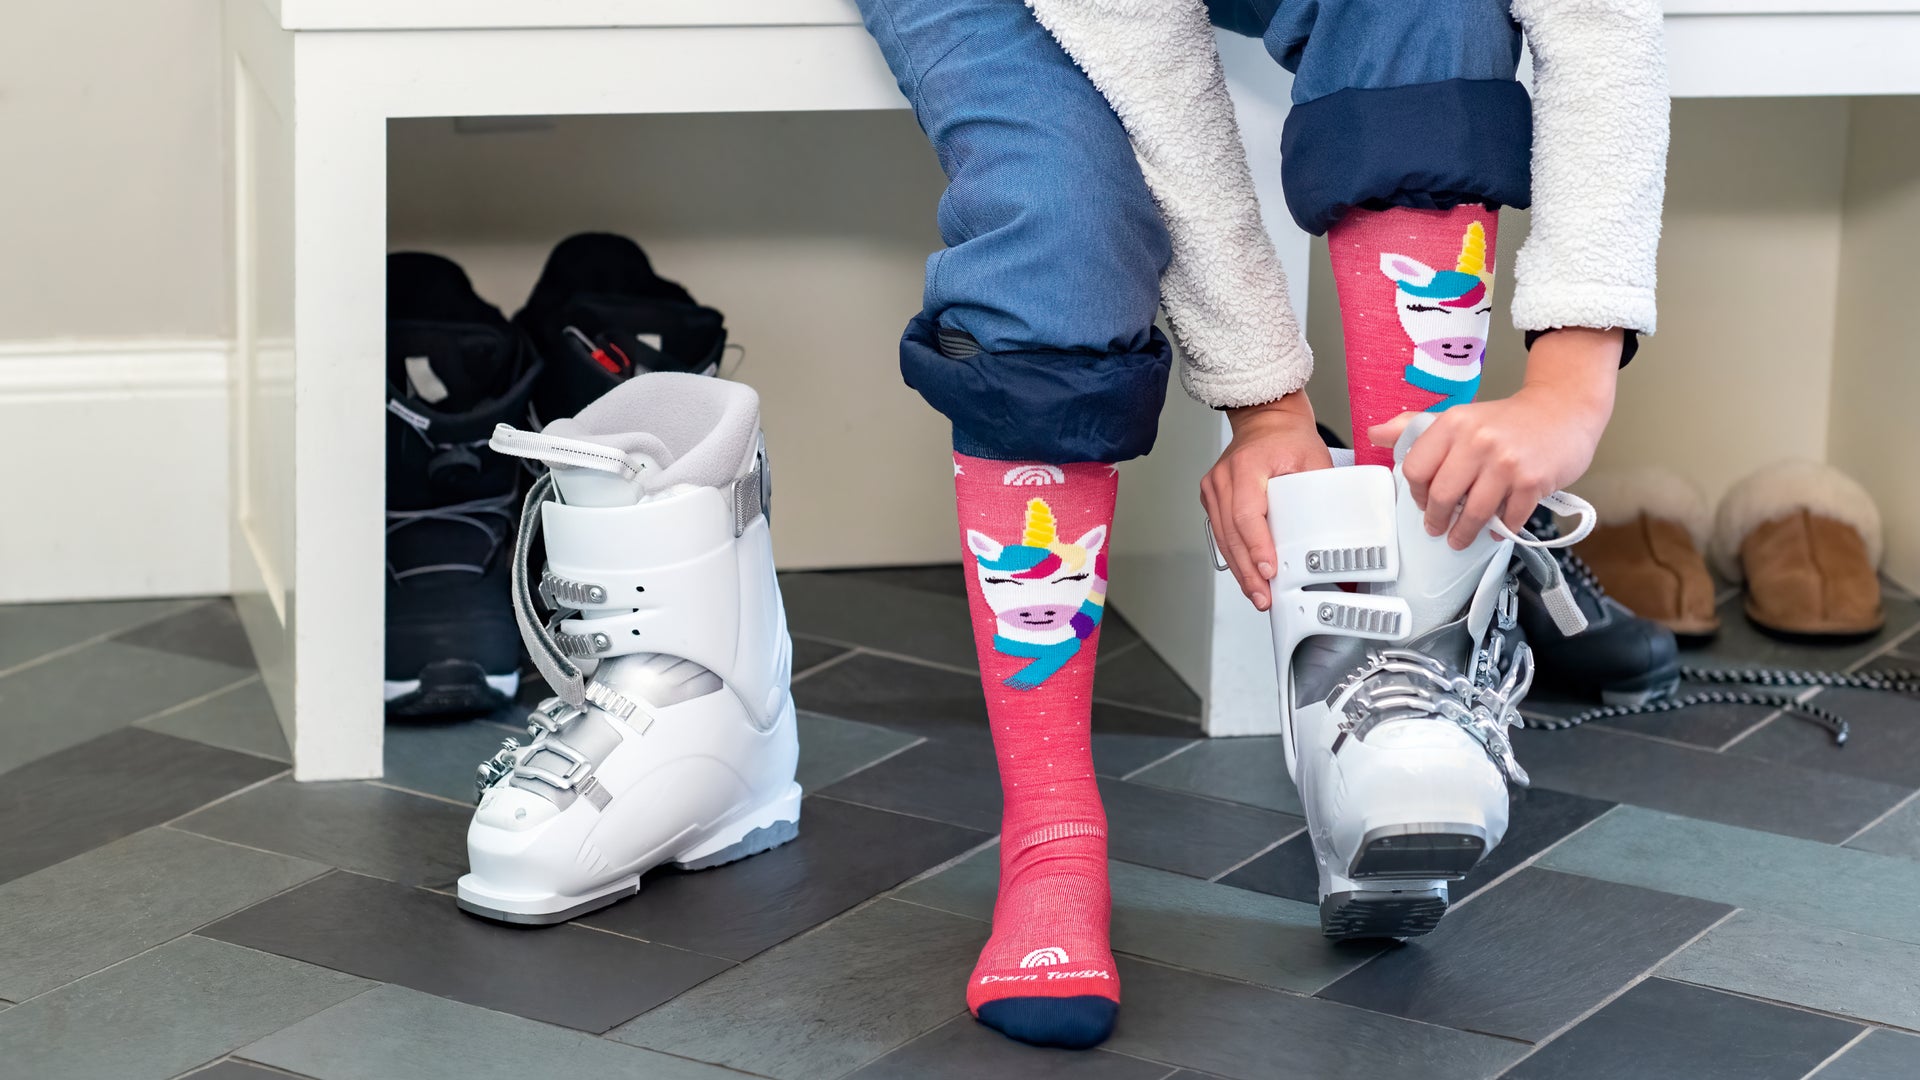 AffeGifts Chaussette de Ski Enfant, Childrens Ski Socks Warm